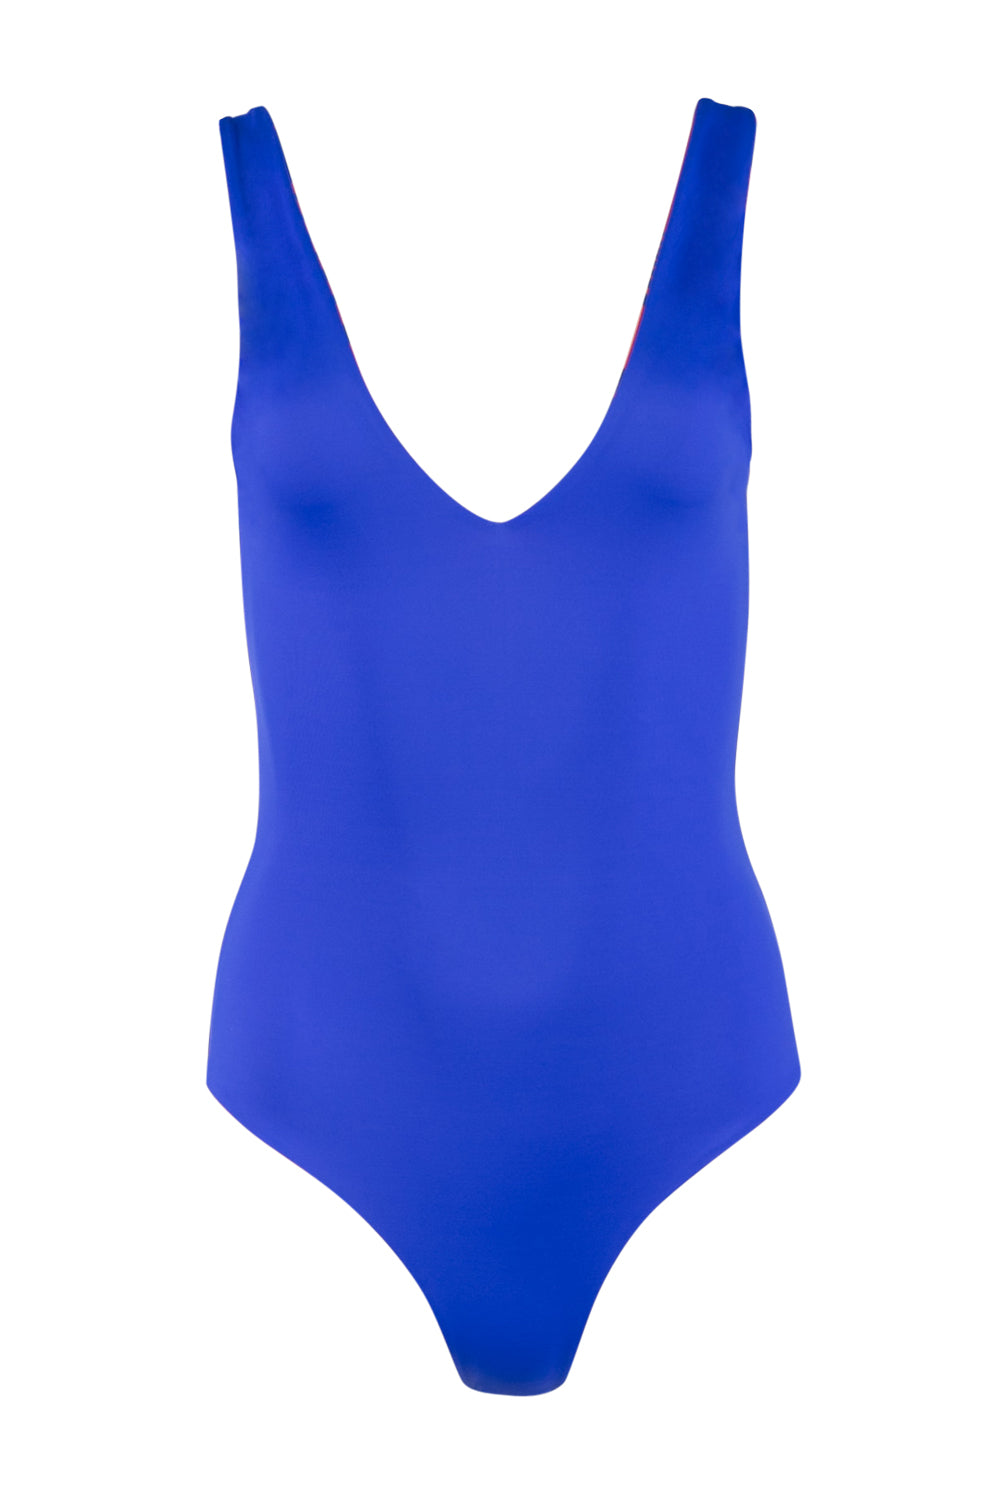 Miraclesuit Rock Show Oceanus Coral Swimsuit In Stock At UK Swimwear